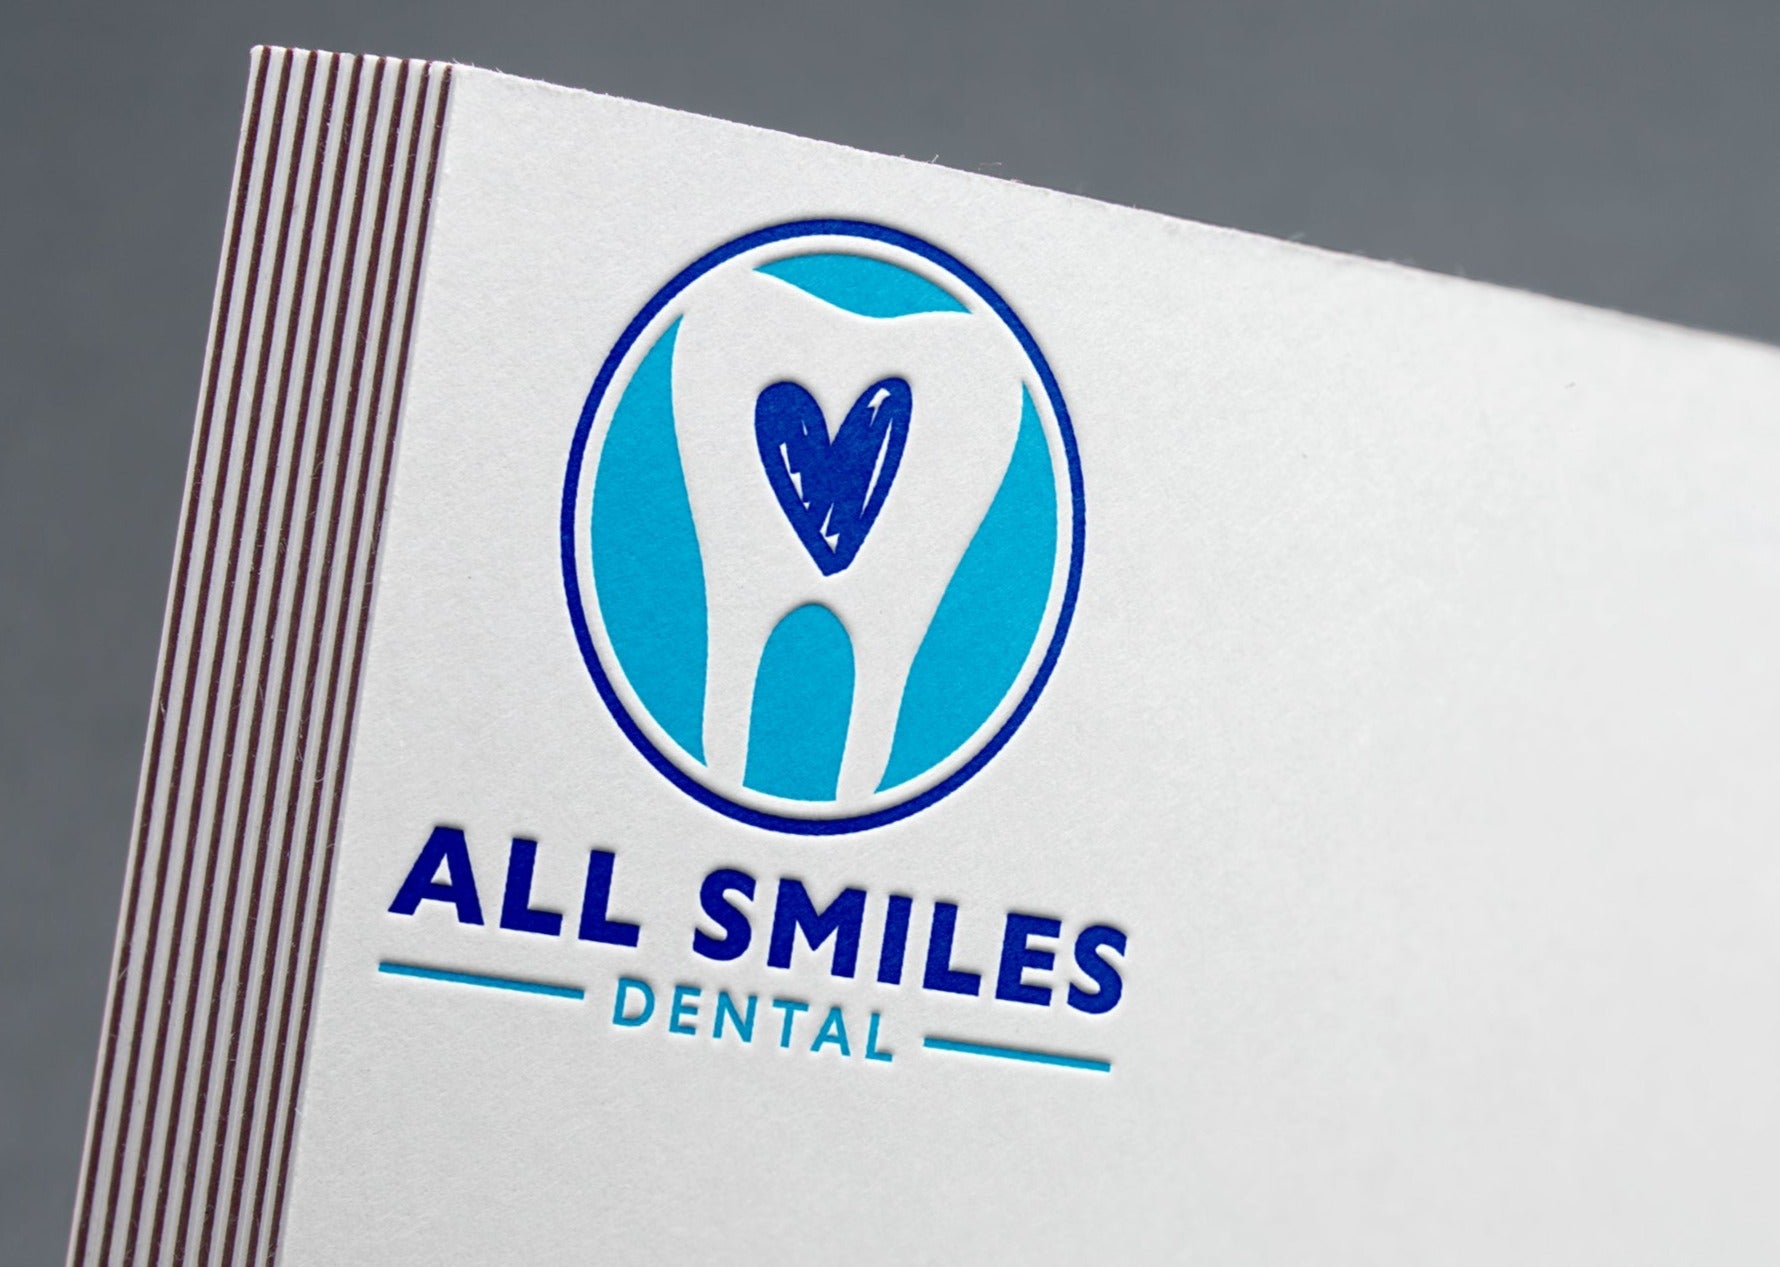 Dentist Logo Design Dental Tooth Design Dentist Office Dental Teeth